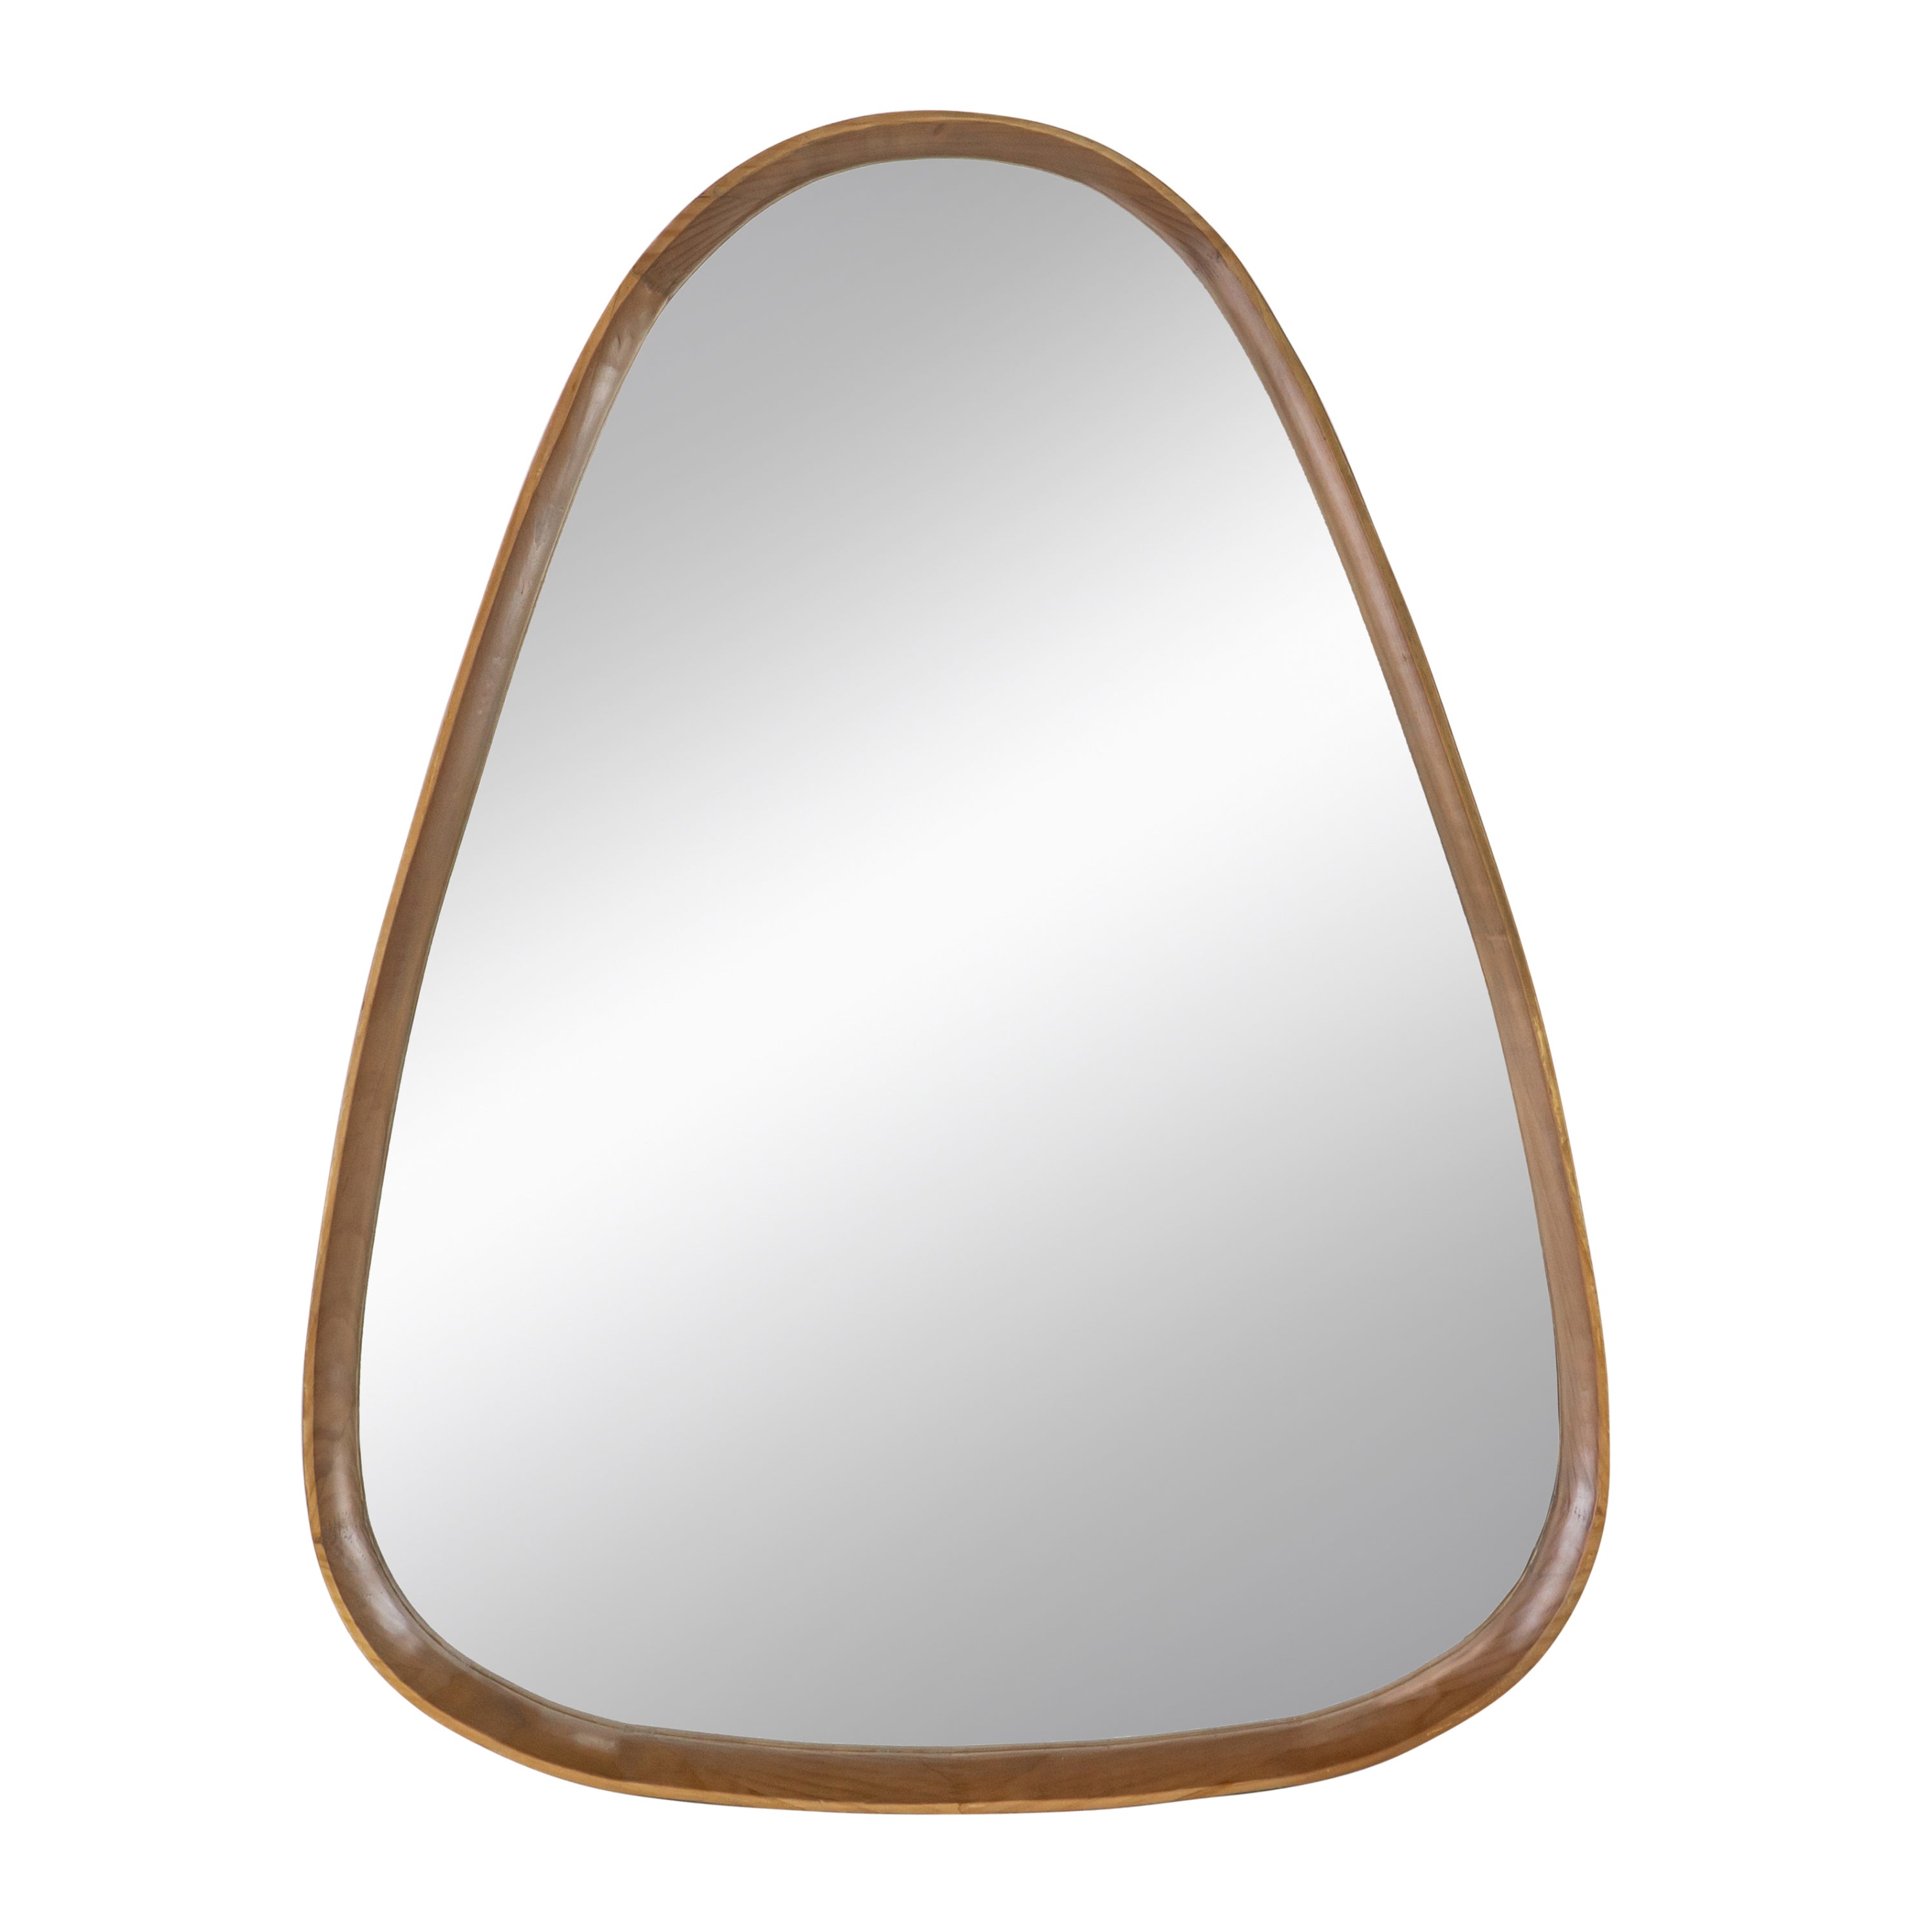 Irregular Mirror with Wood Frame 30"x38"